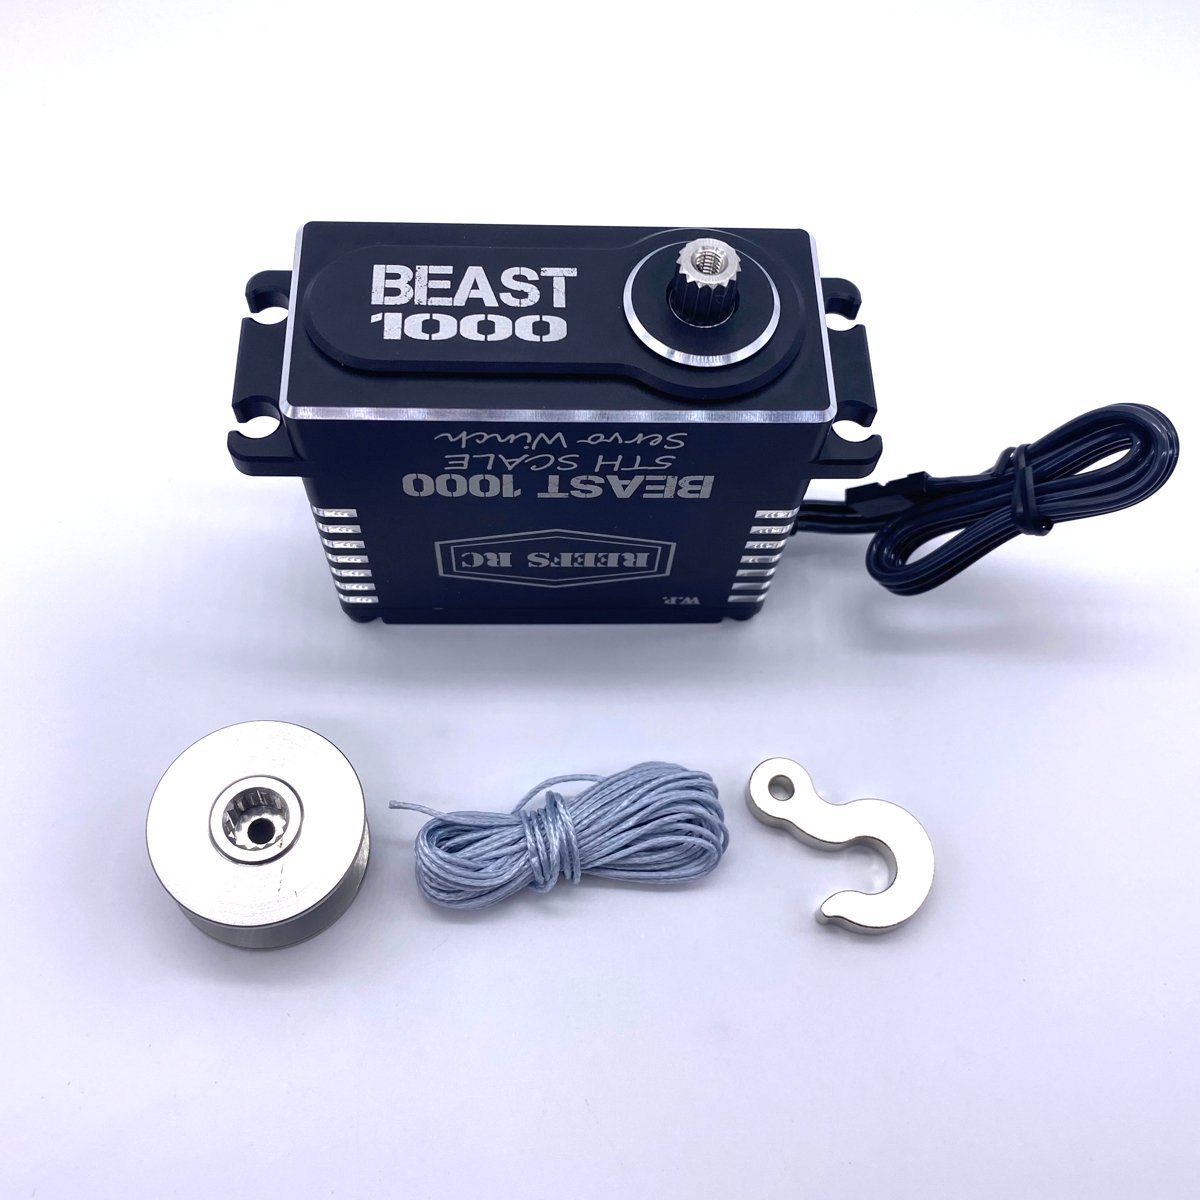 Beast 1000 1/5 Scale Servo Winch